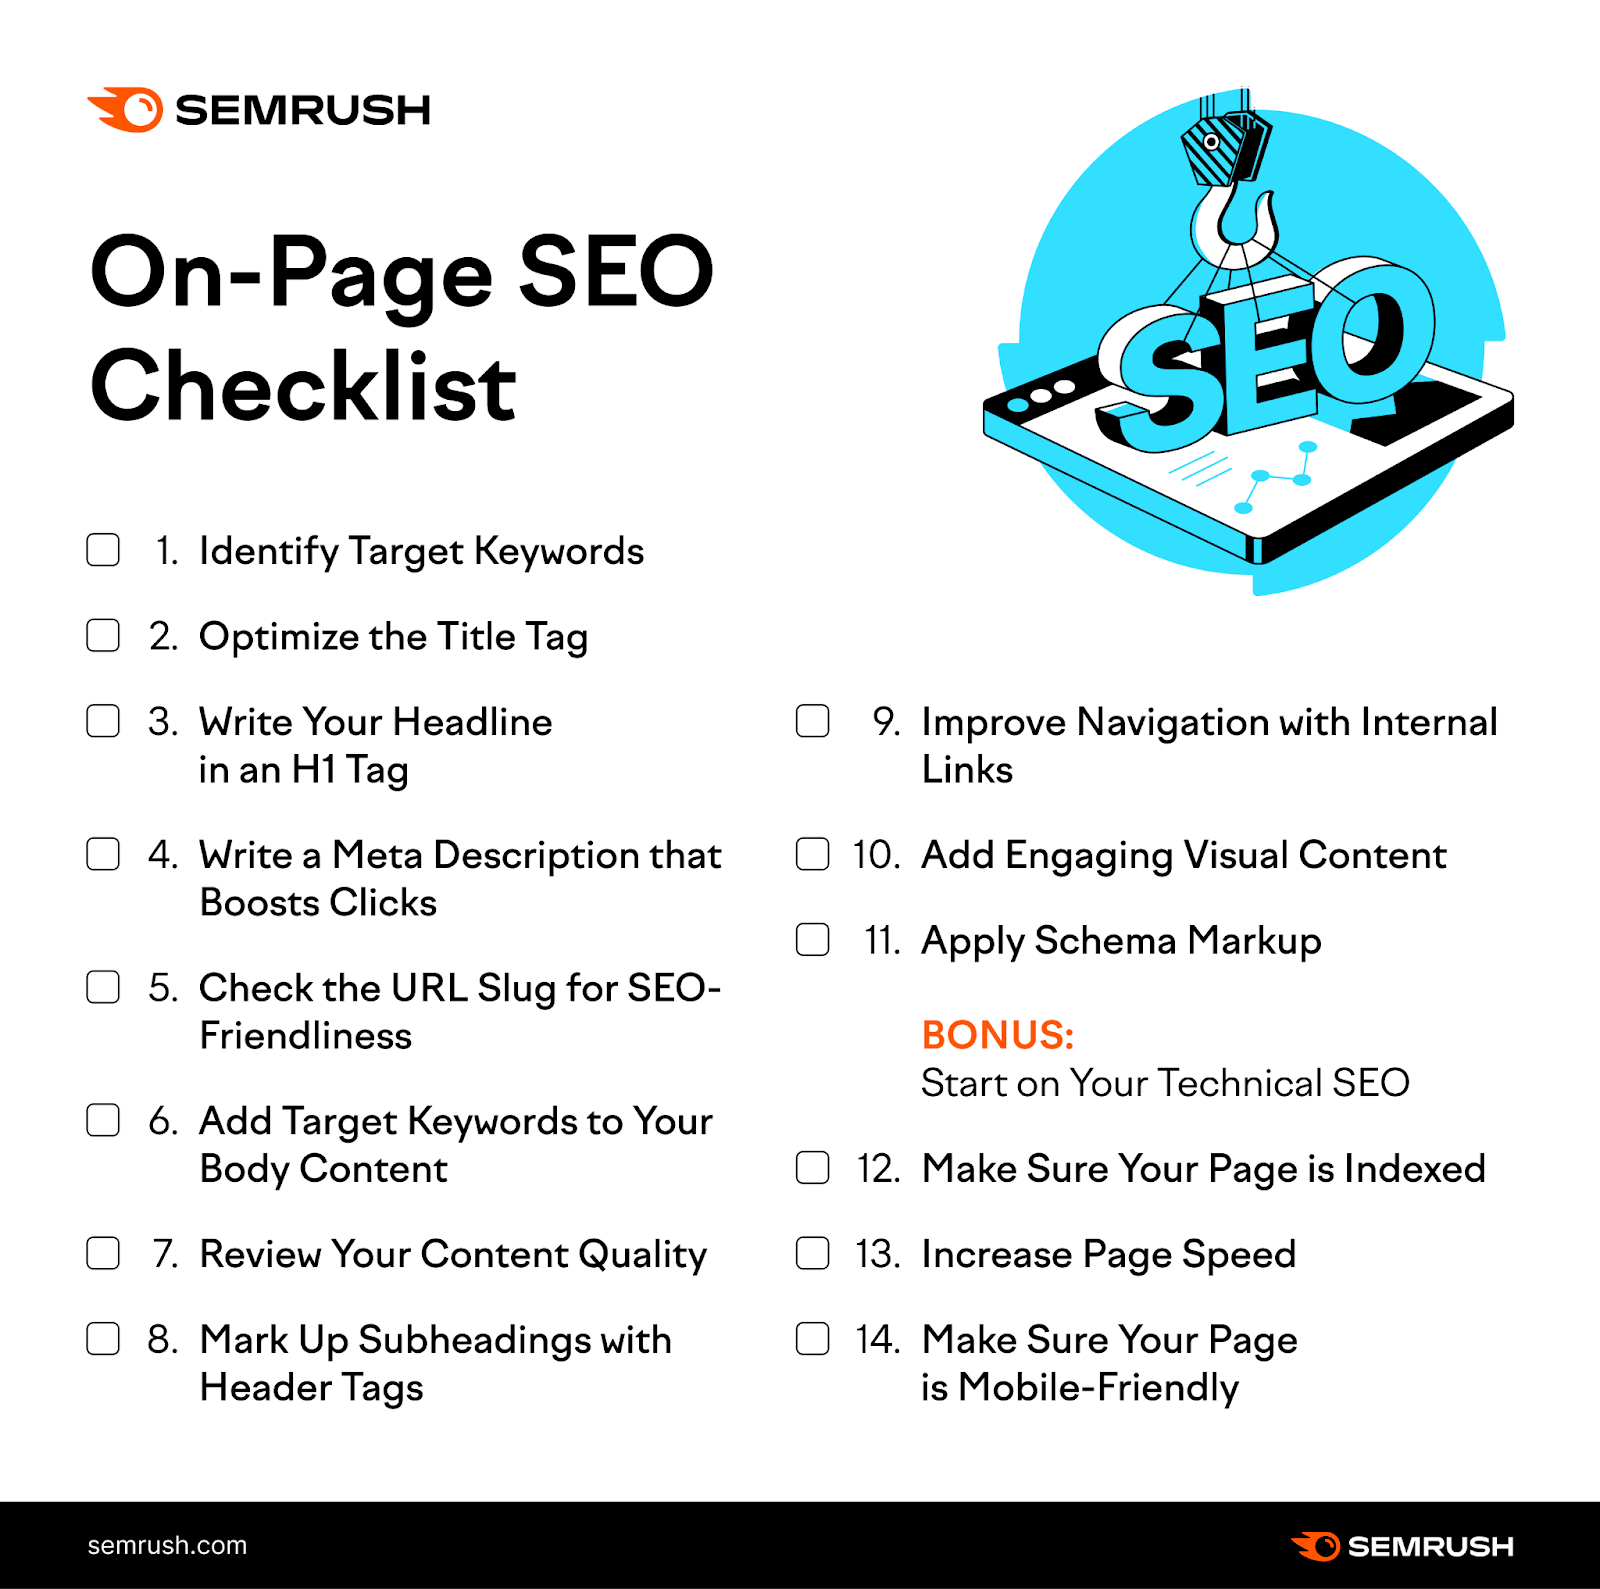 Semrush's "on-page SEO checklist" infographic